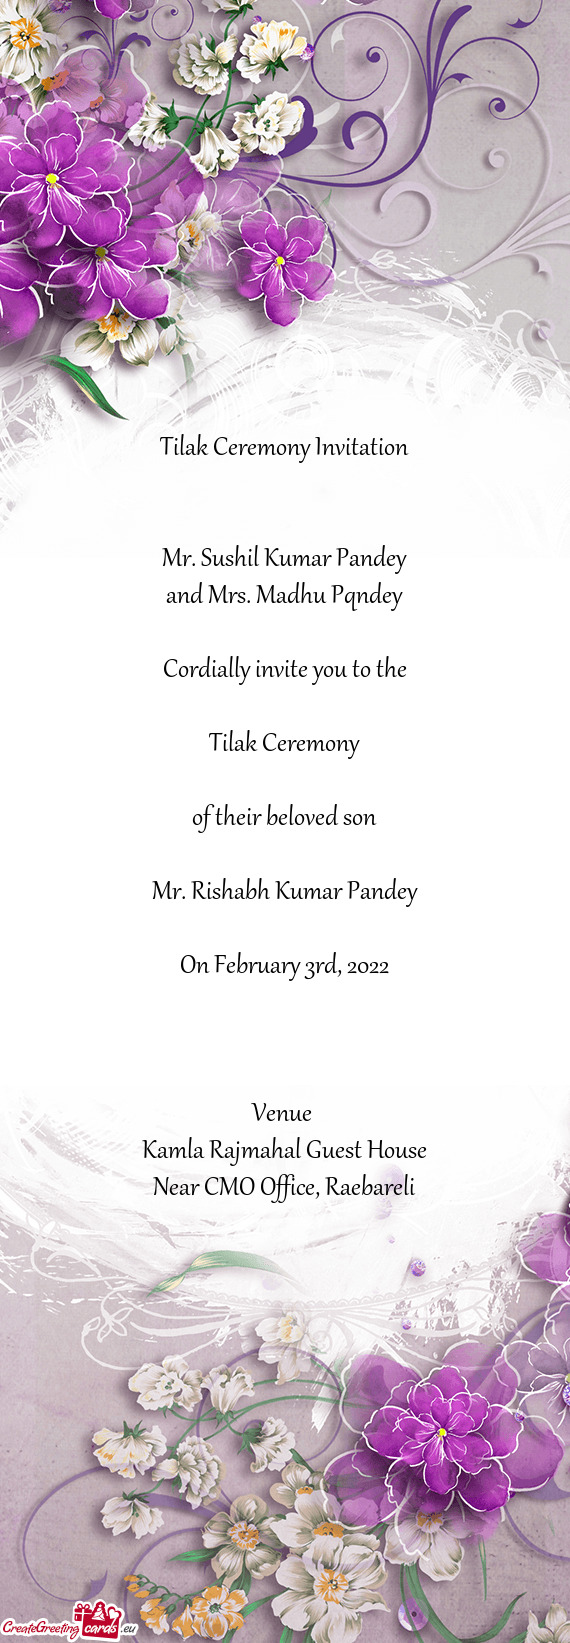 Mr. Sushil Kumar Pandey